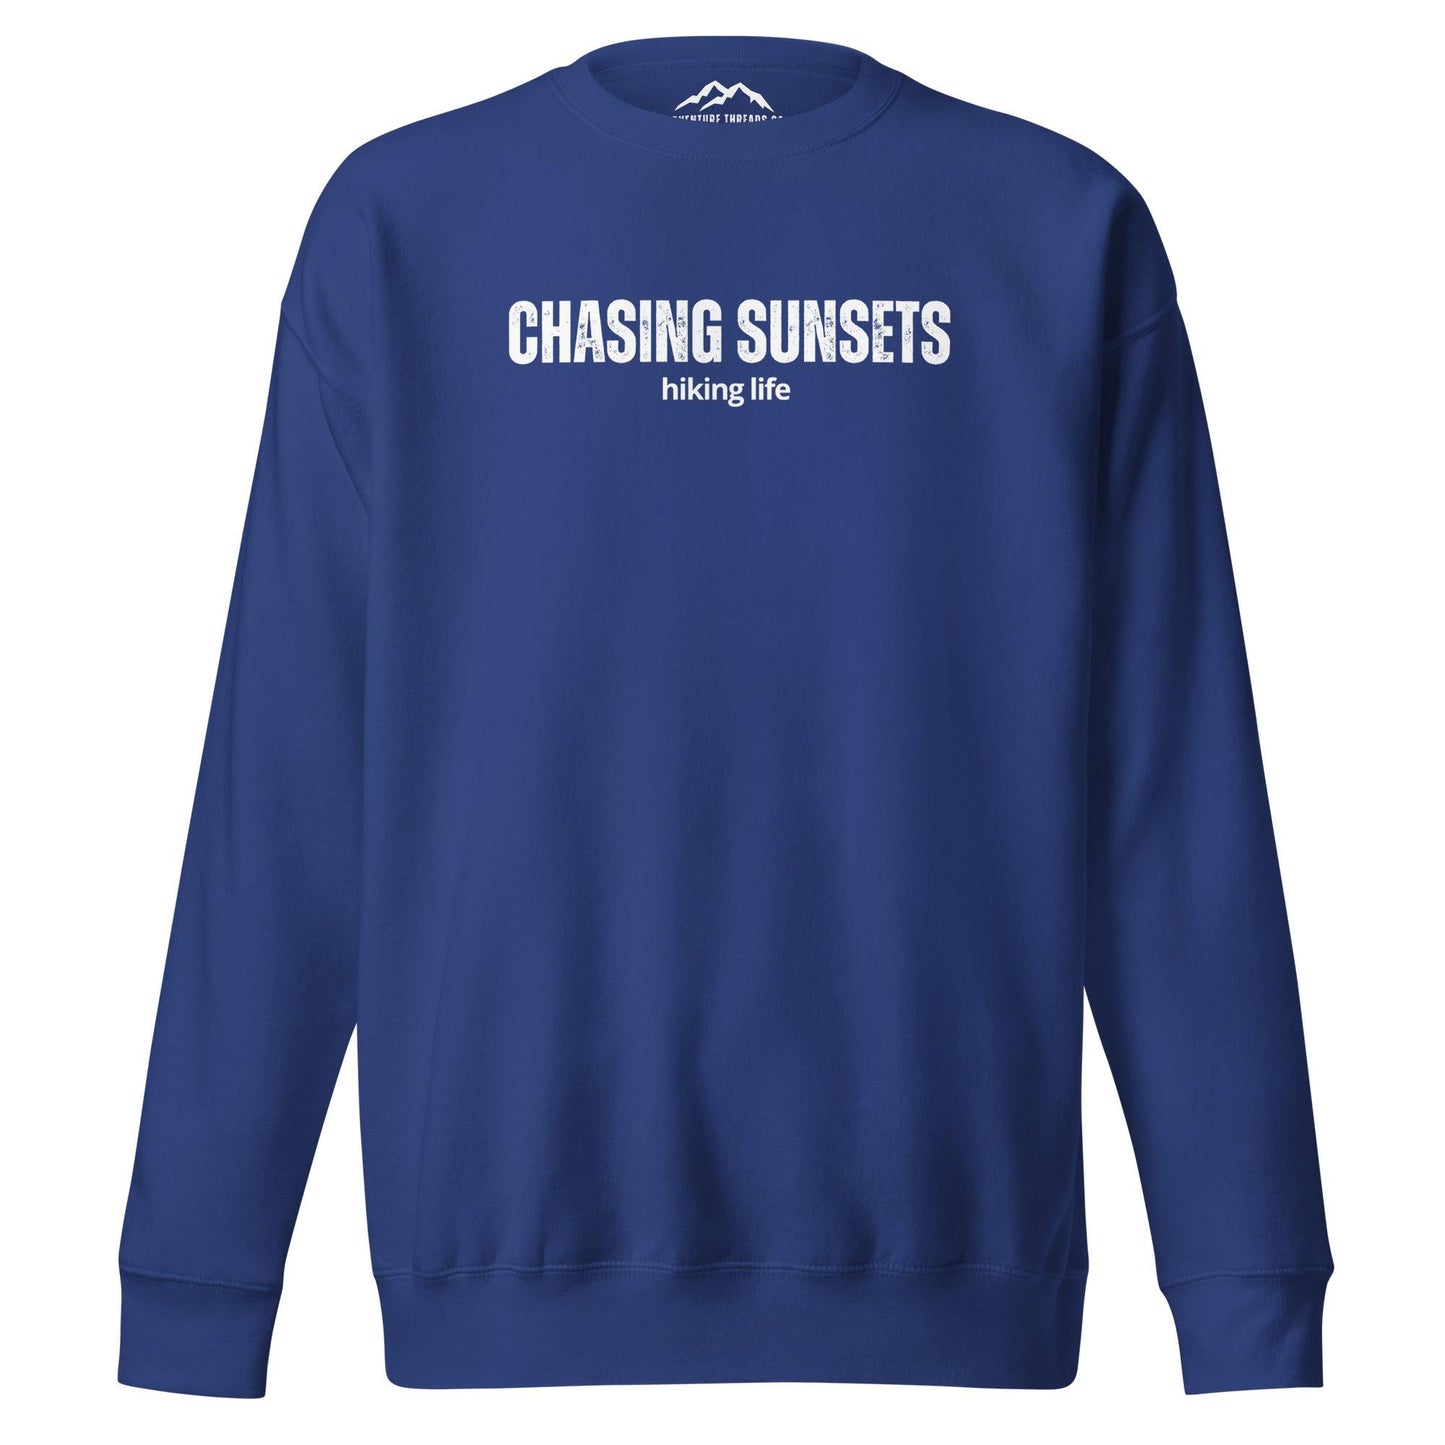 Chasing Sunsets Premium Sweatshirt - Adventure Threads Company